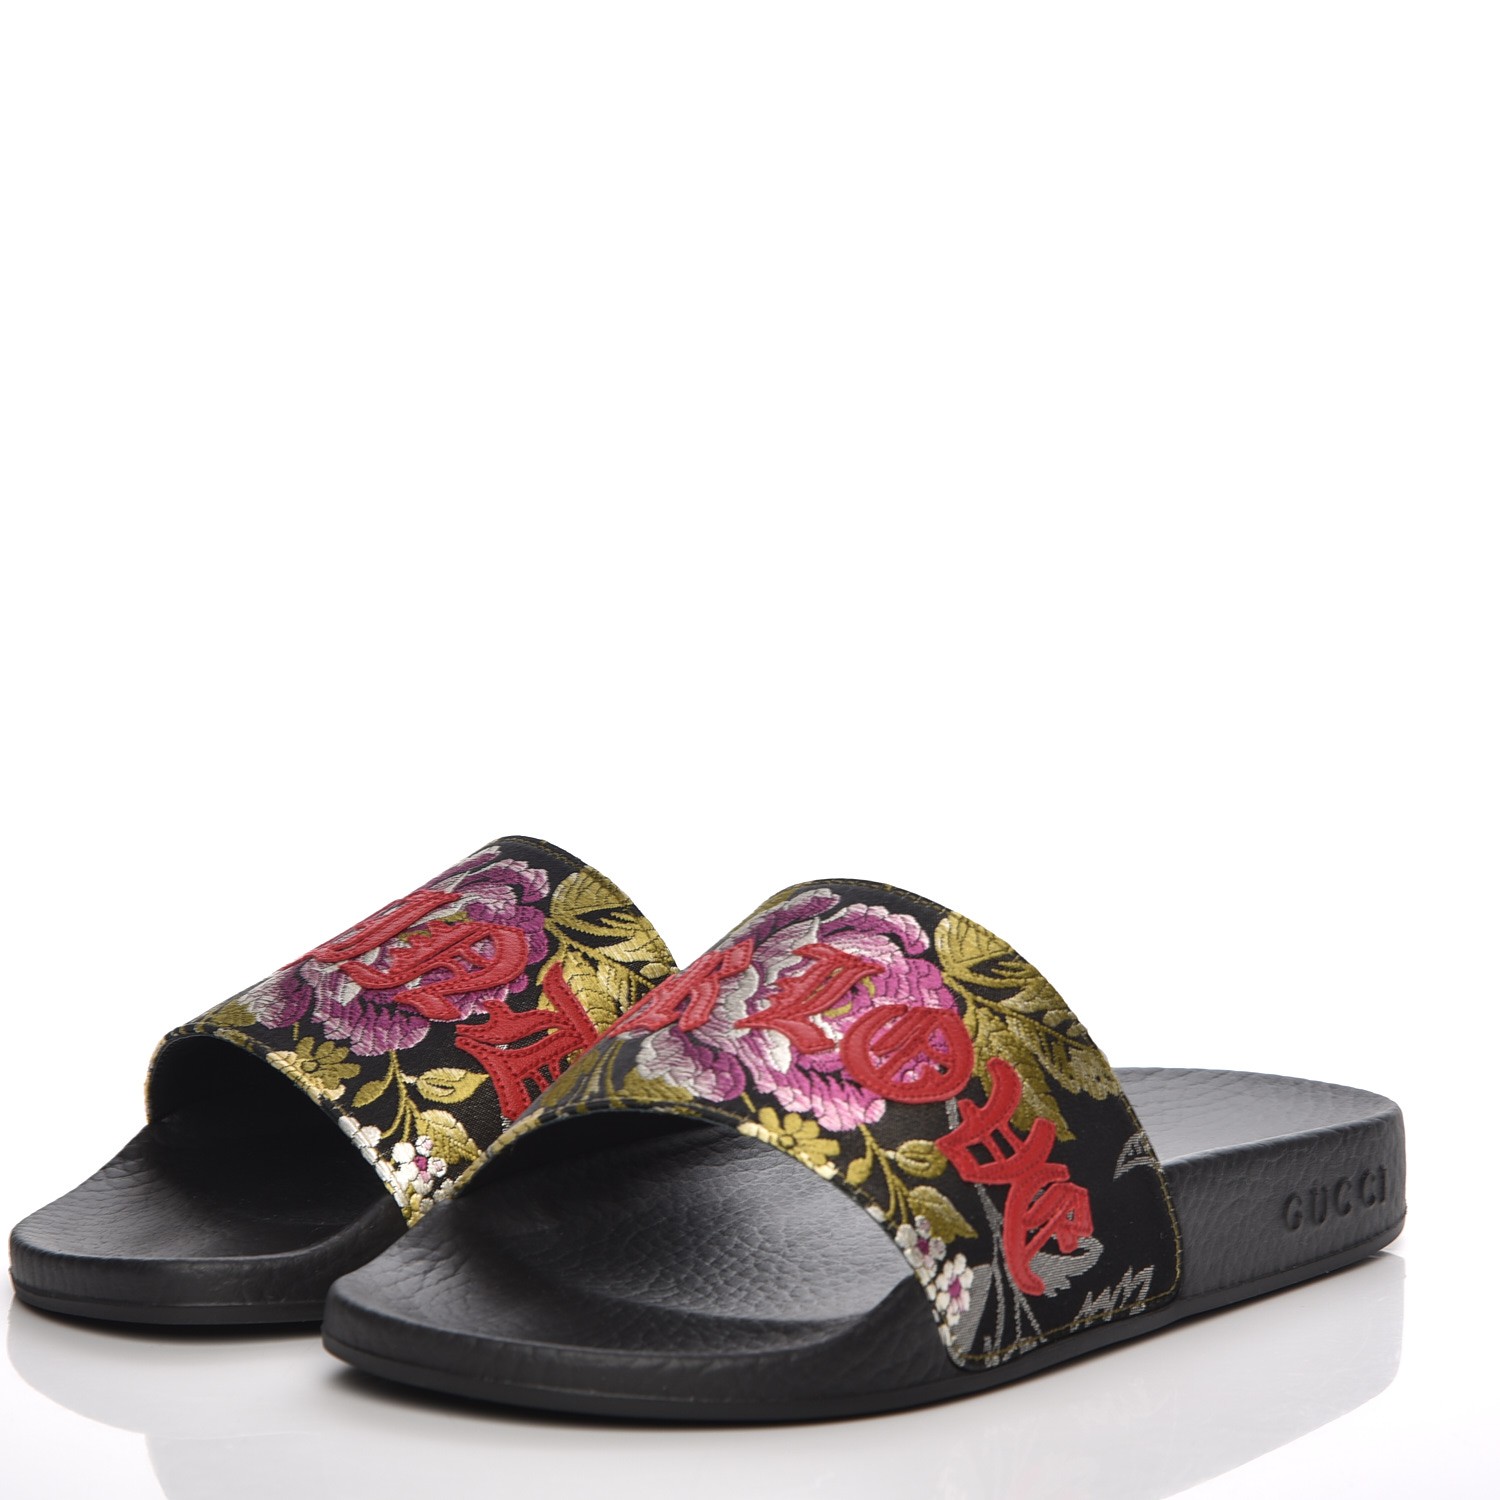 GUCCI Floral Jacquard Slide Sandals 36 Black Multicolor 211051